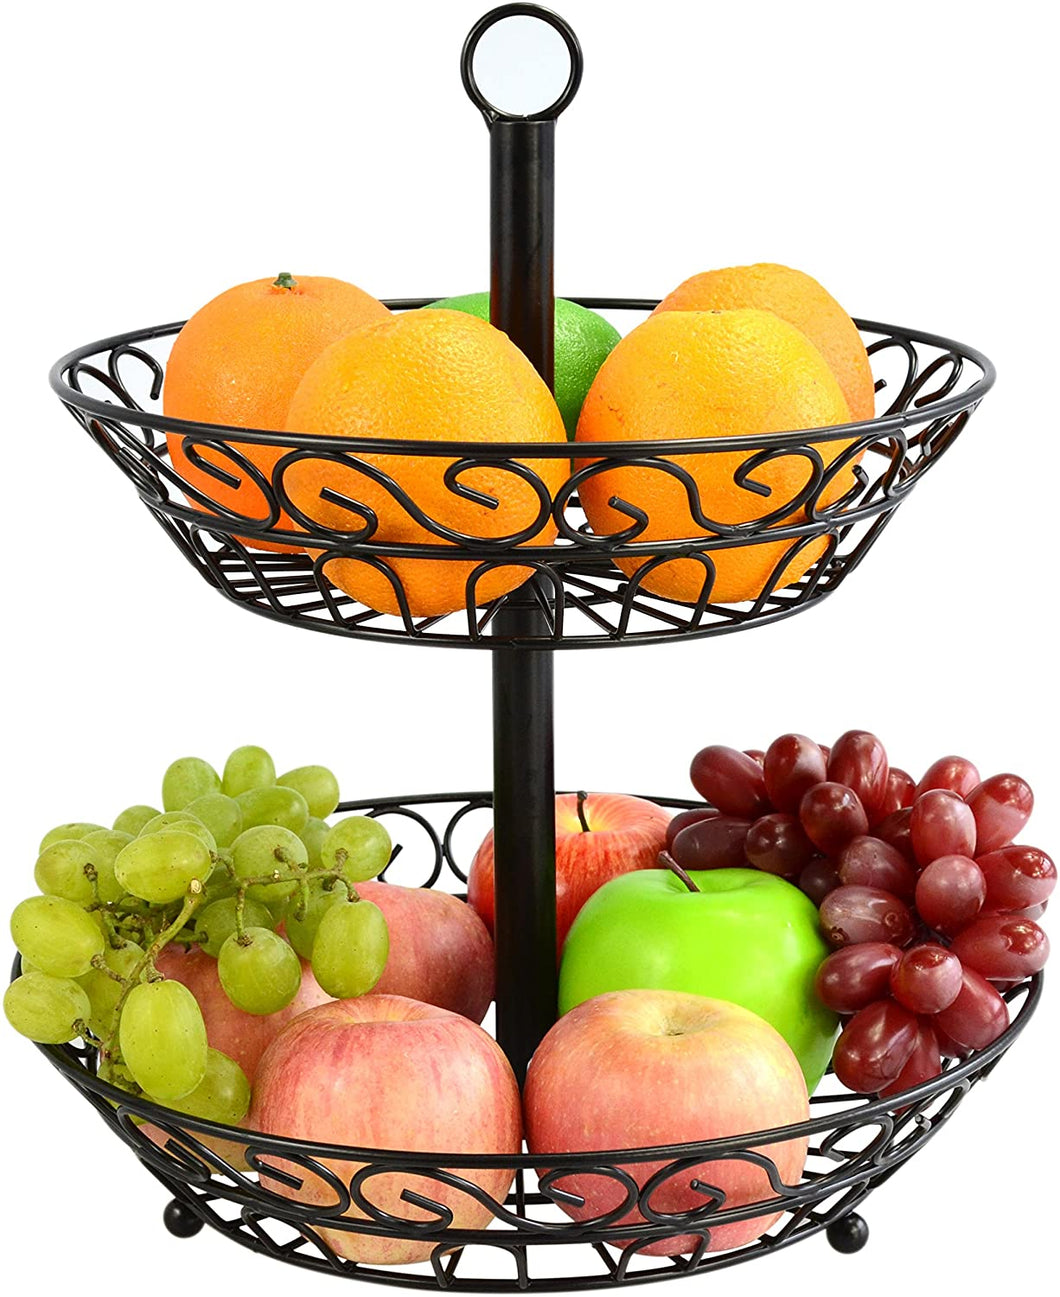 Surpahs 2-Tier Countertop Fruit Basket Stand